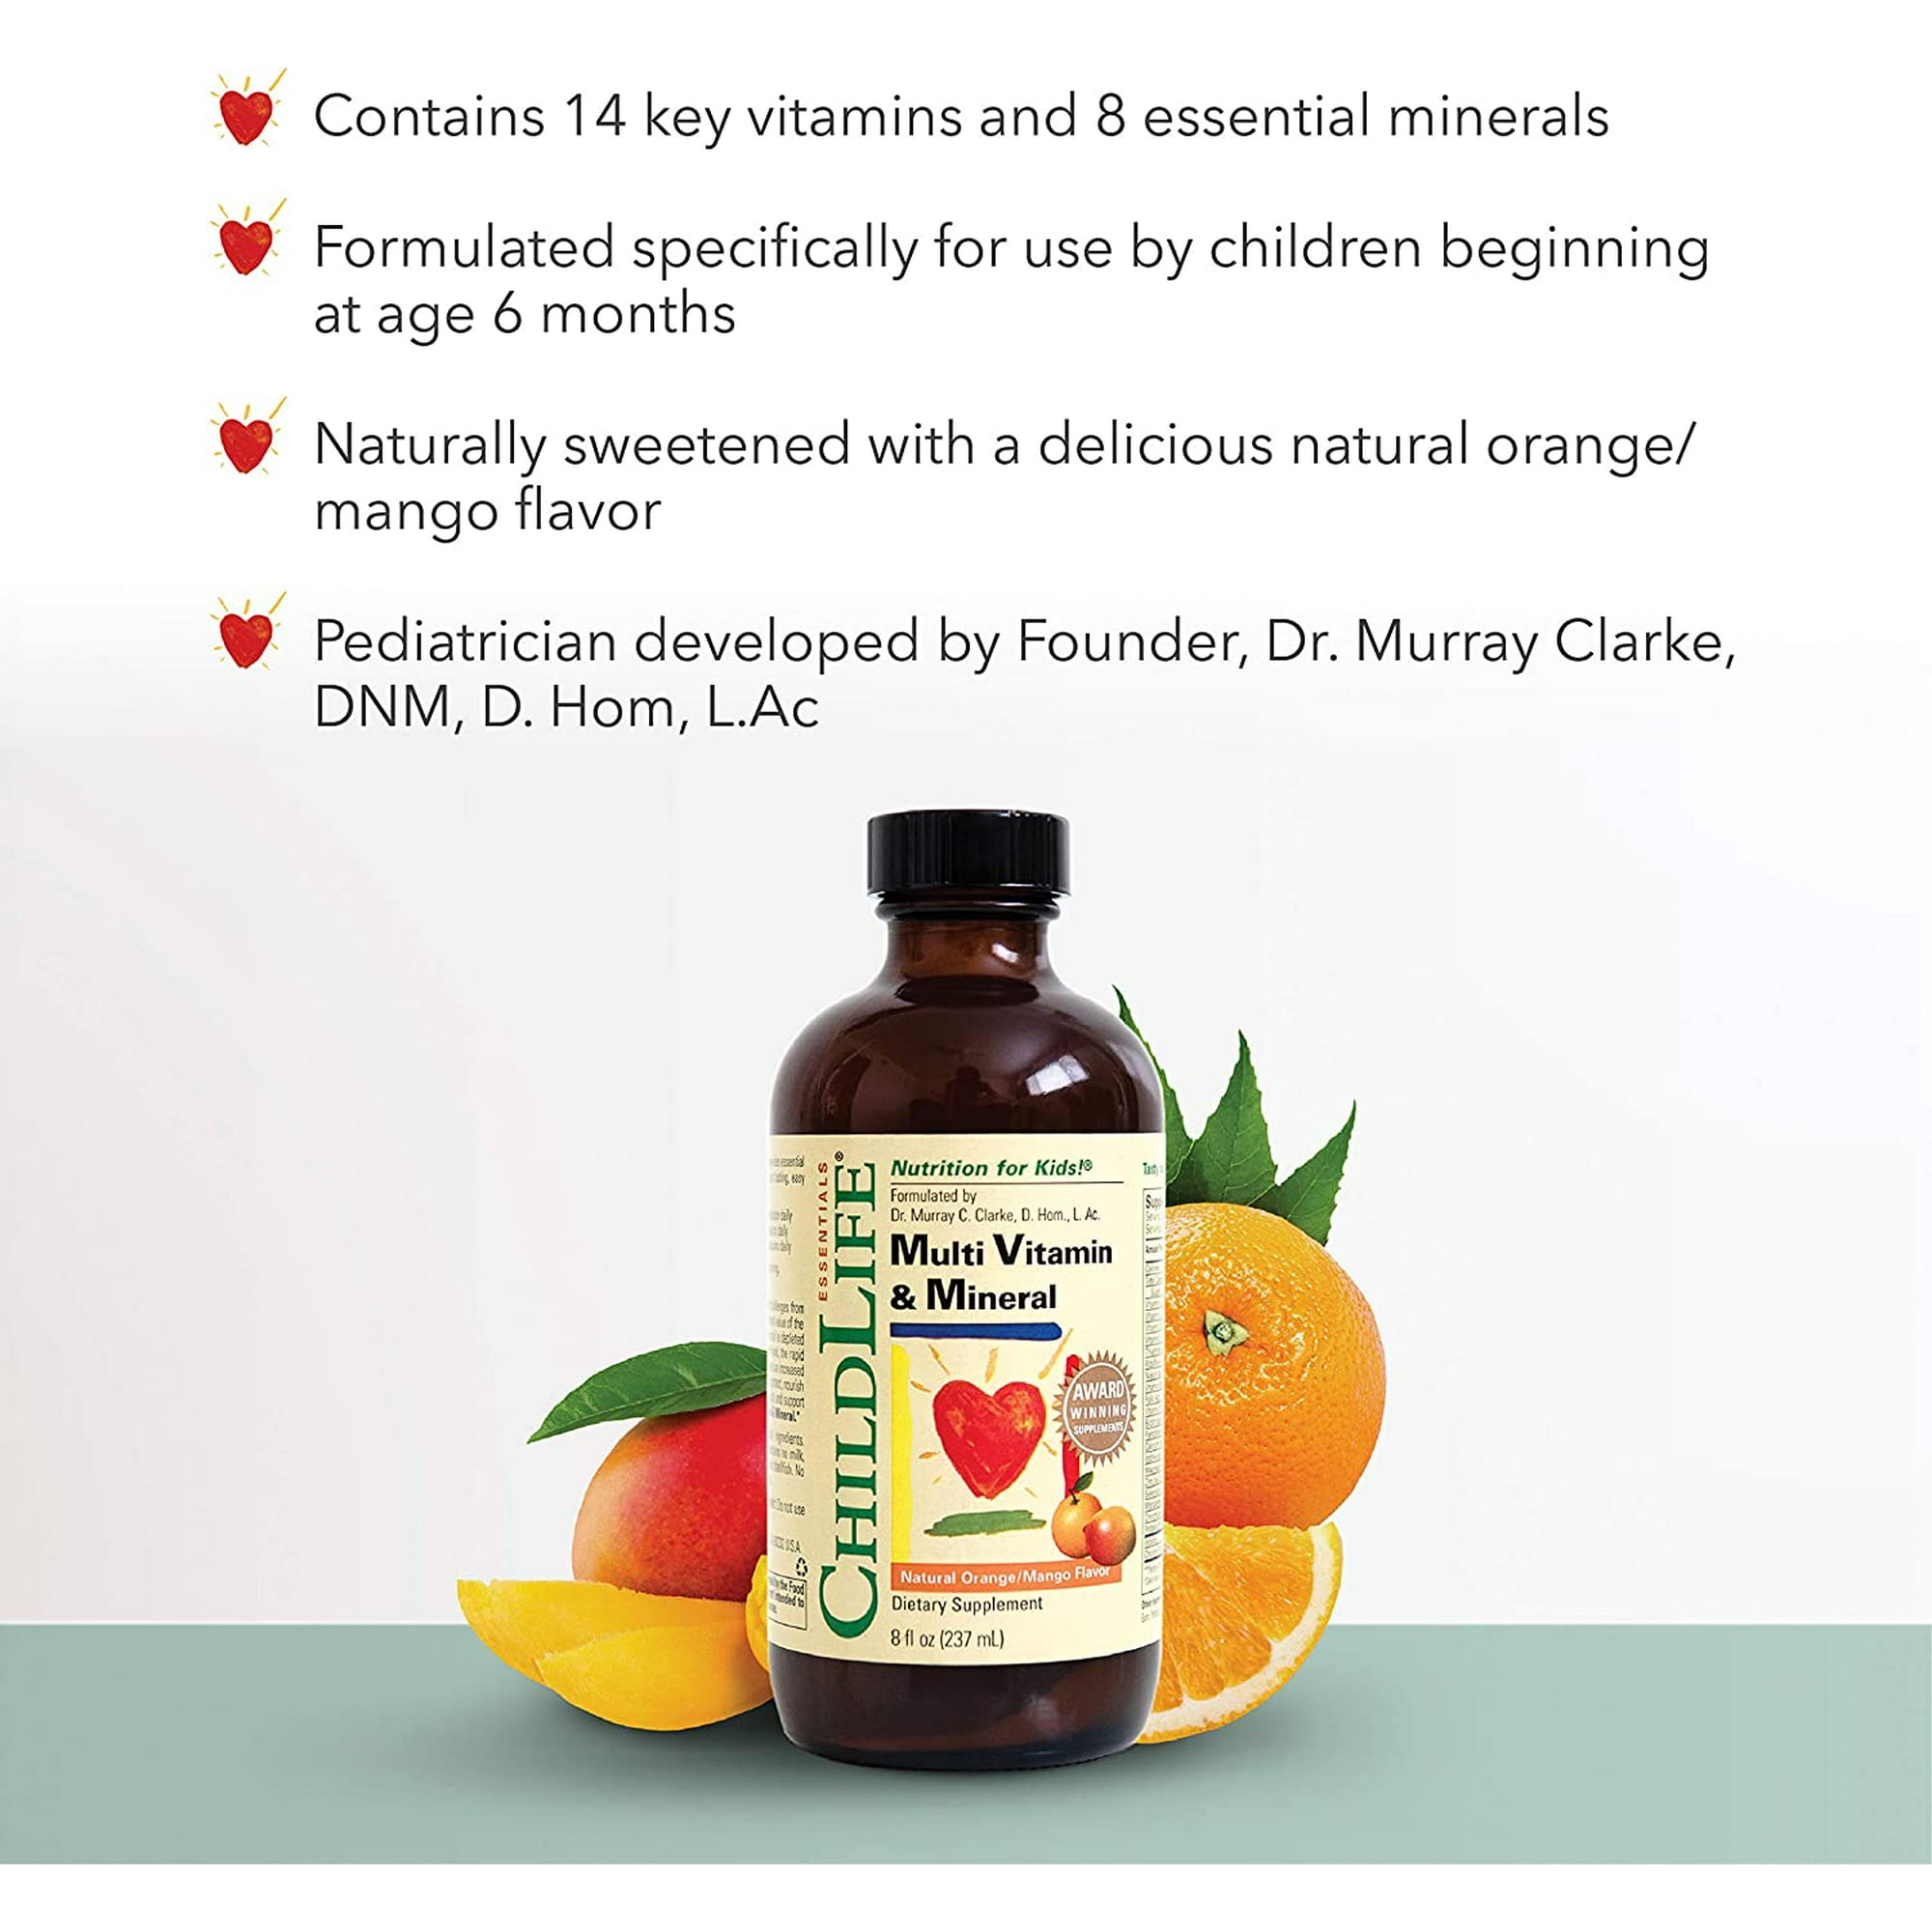 ChildLife Essentials multi vitamini i minerali, tekući dodatak, naranča mango, 8 fl.  oz.